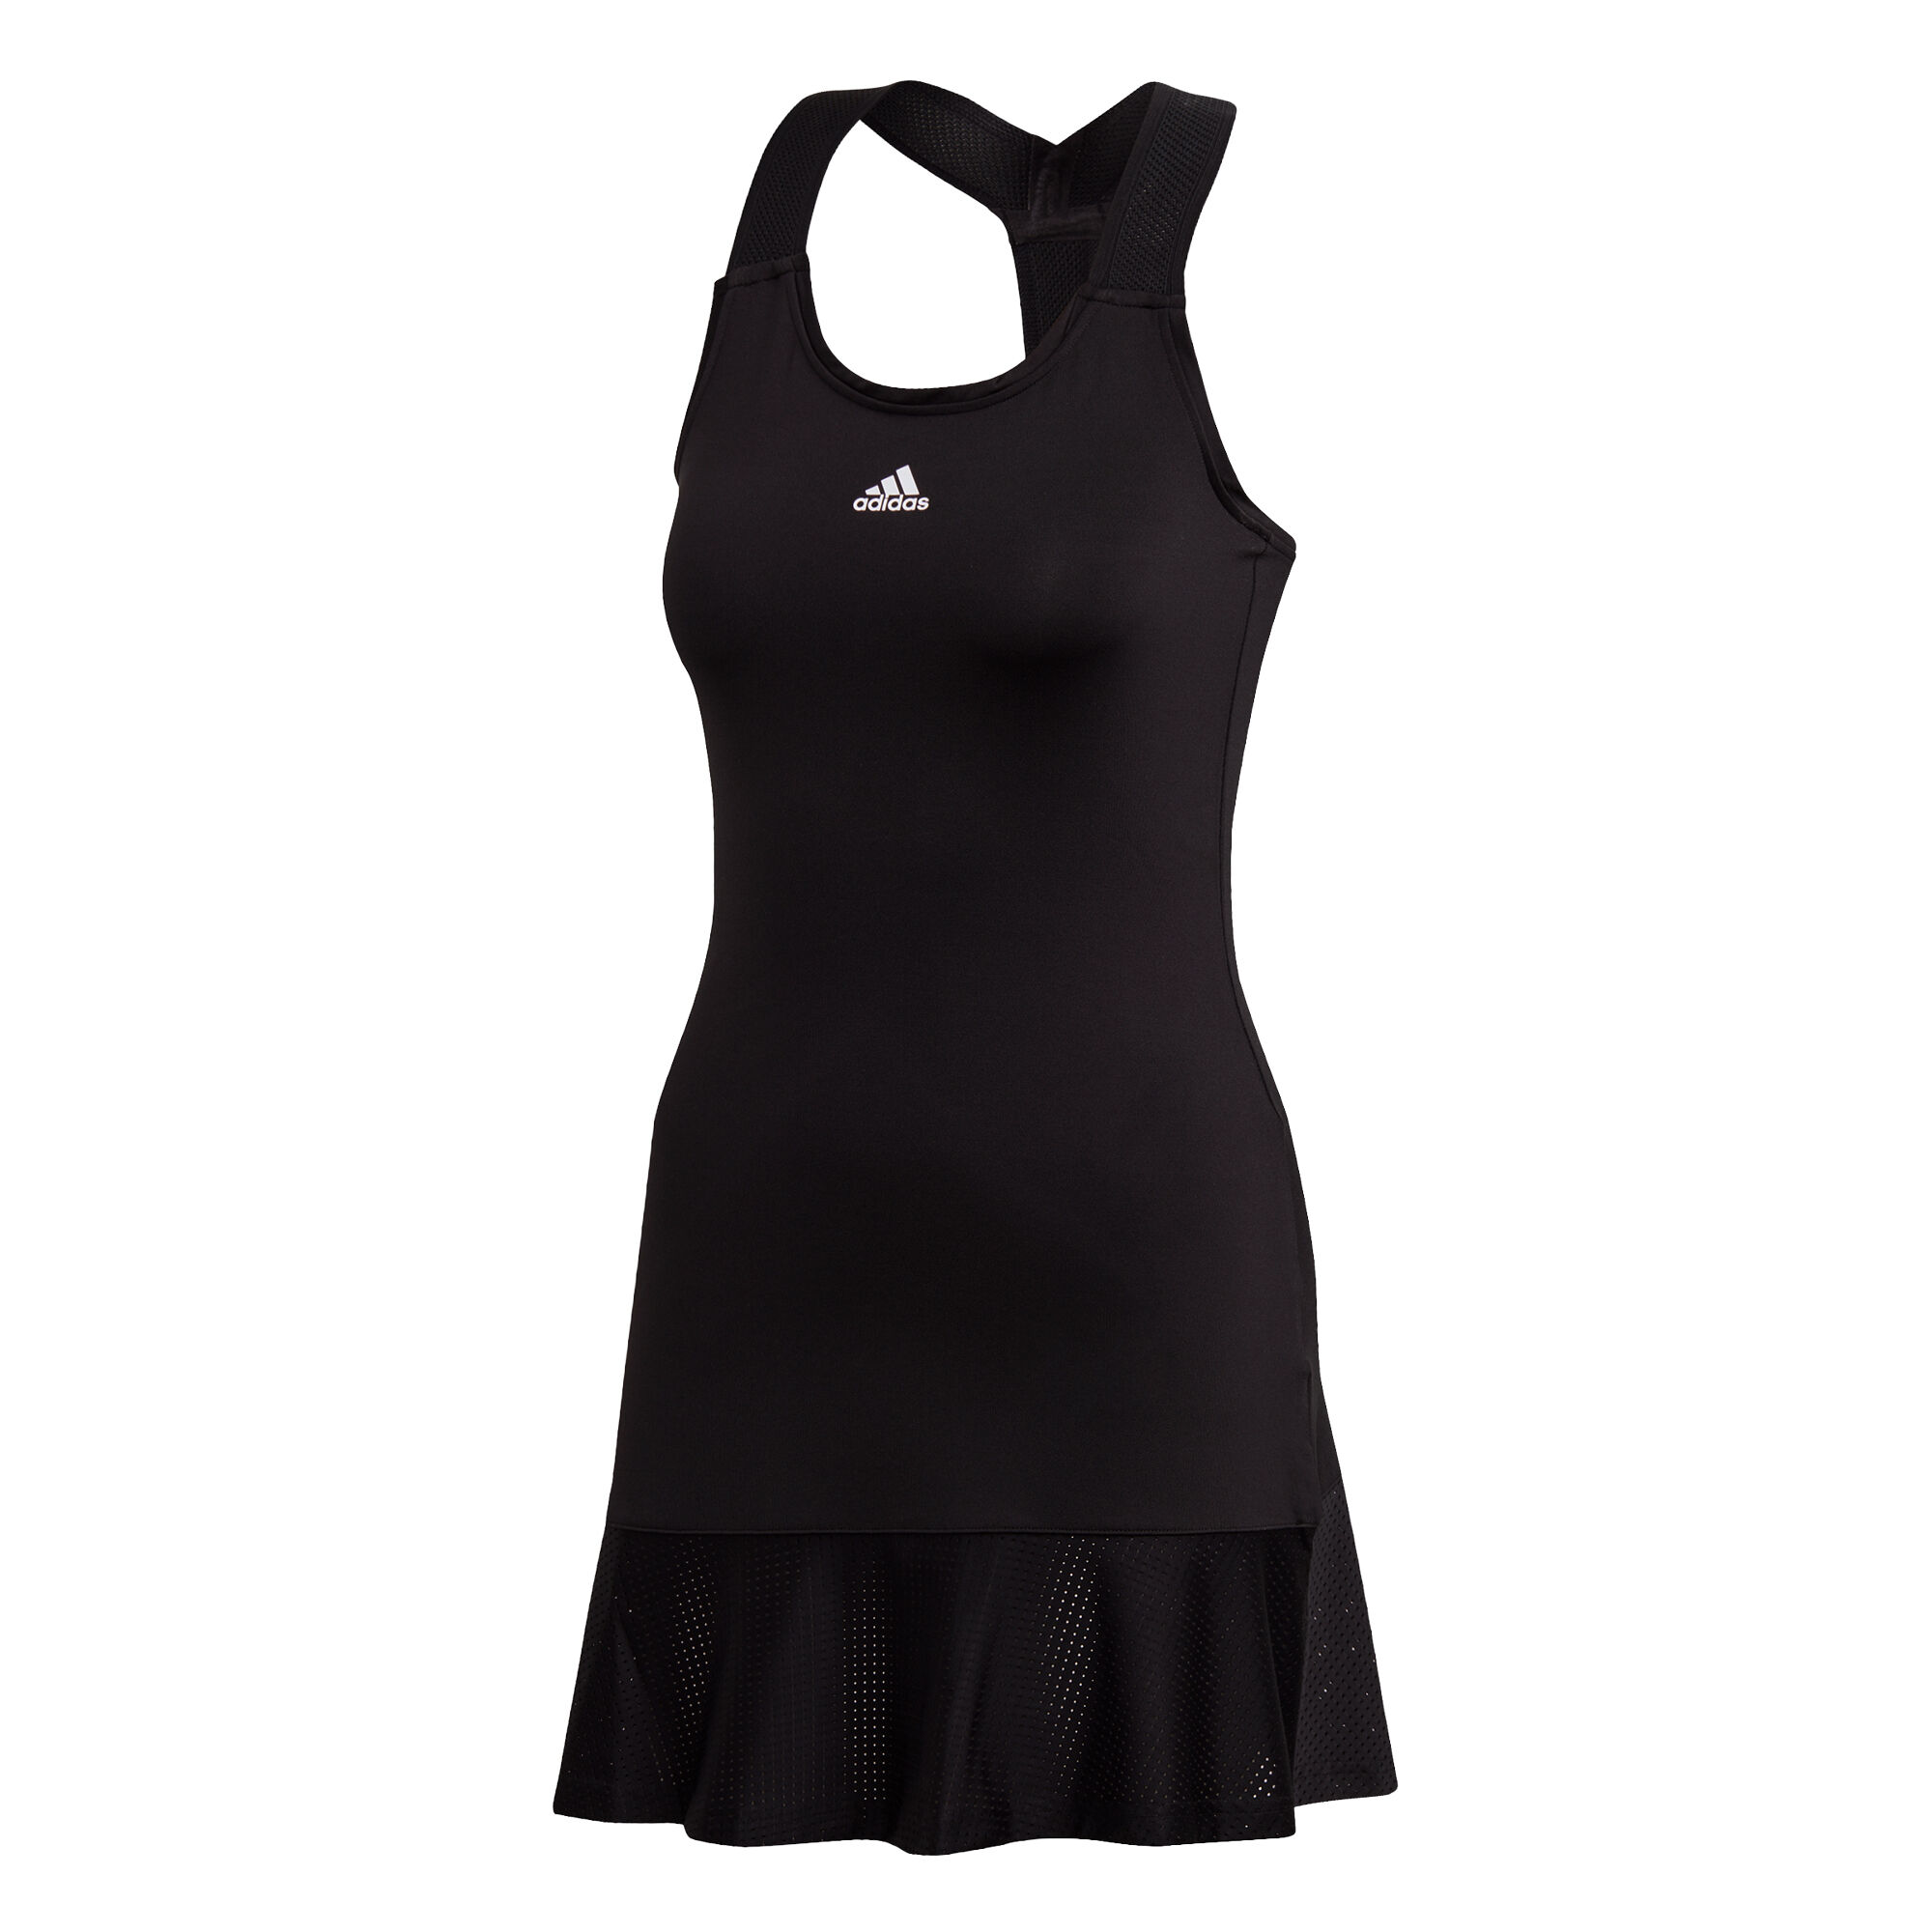 Buy adidas Dress Women Black, White online | Tennis Point UK